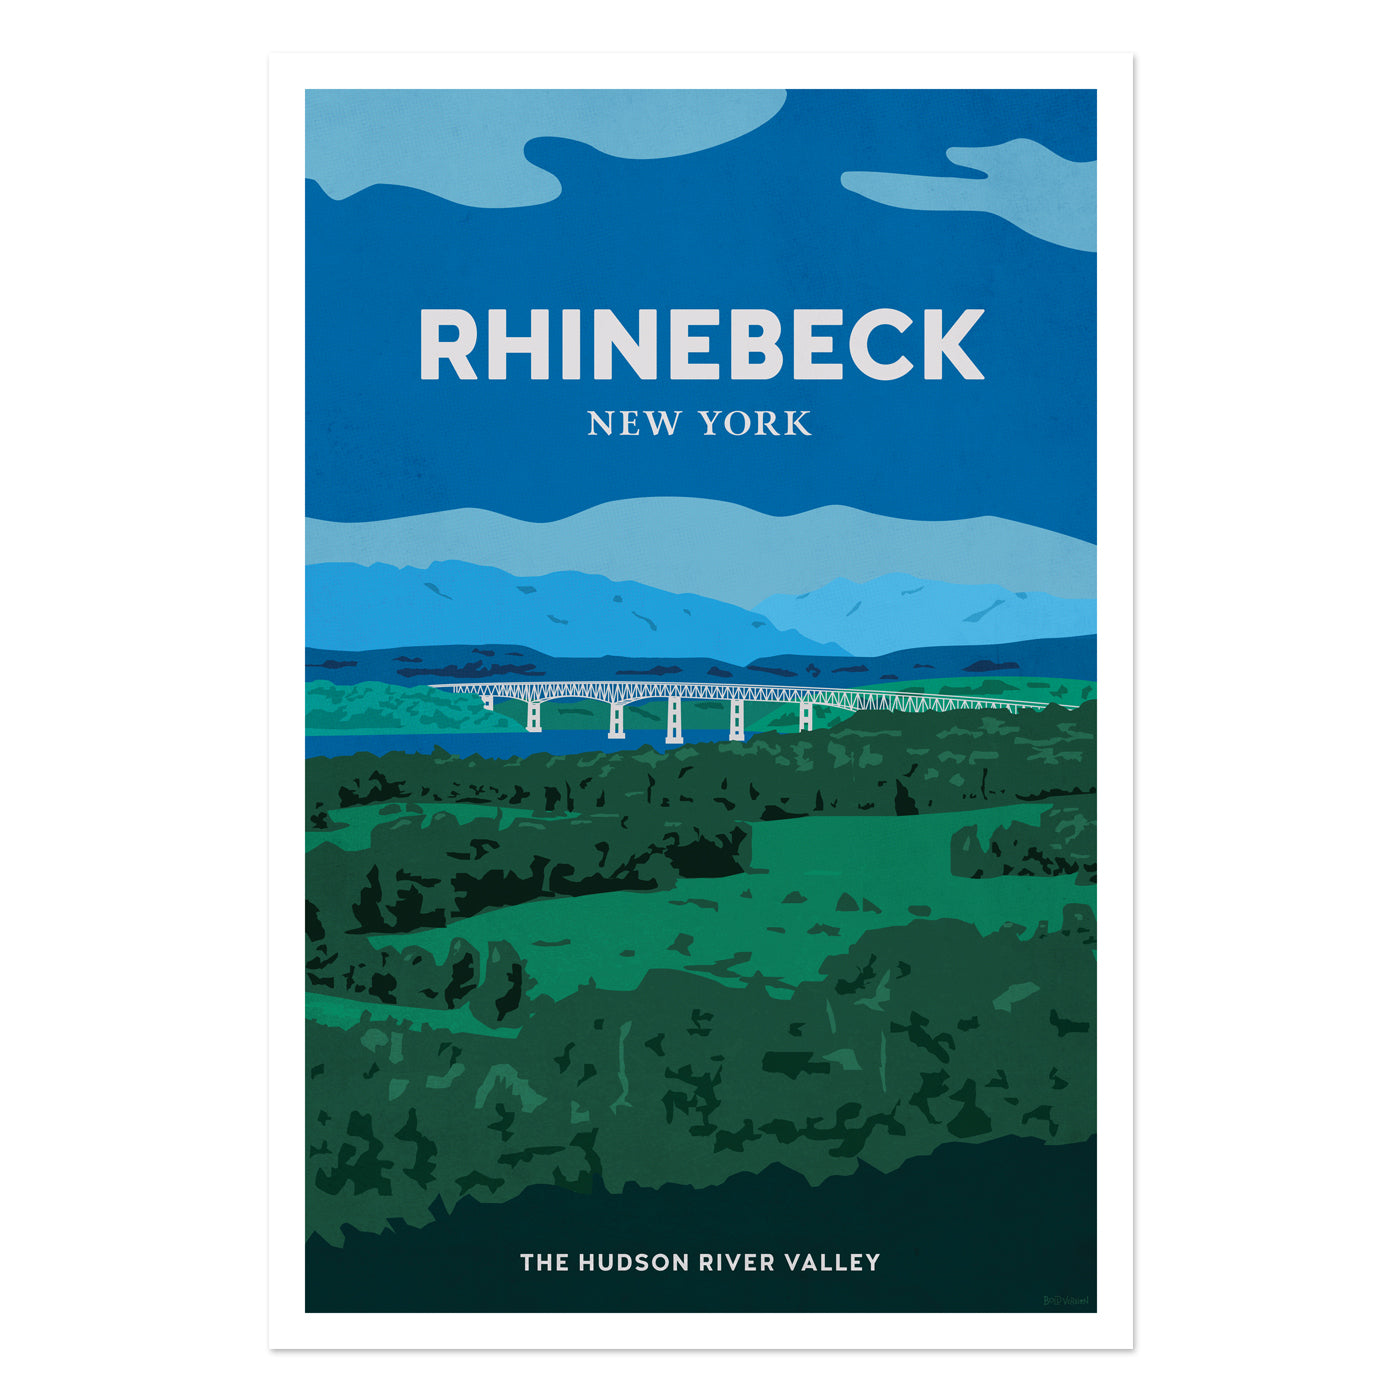 Rhinebeck New York